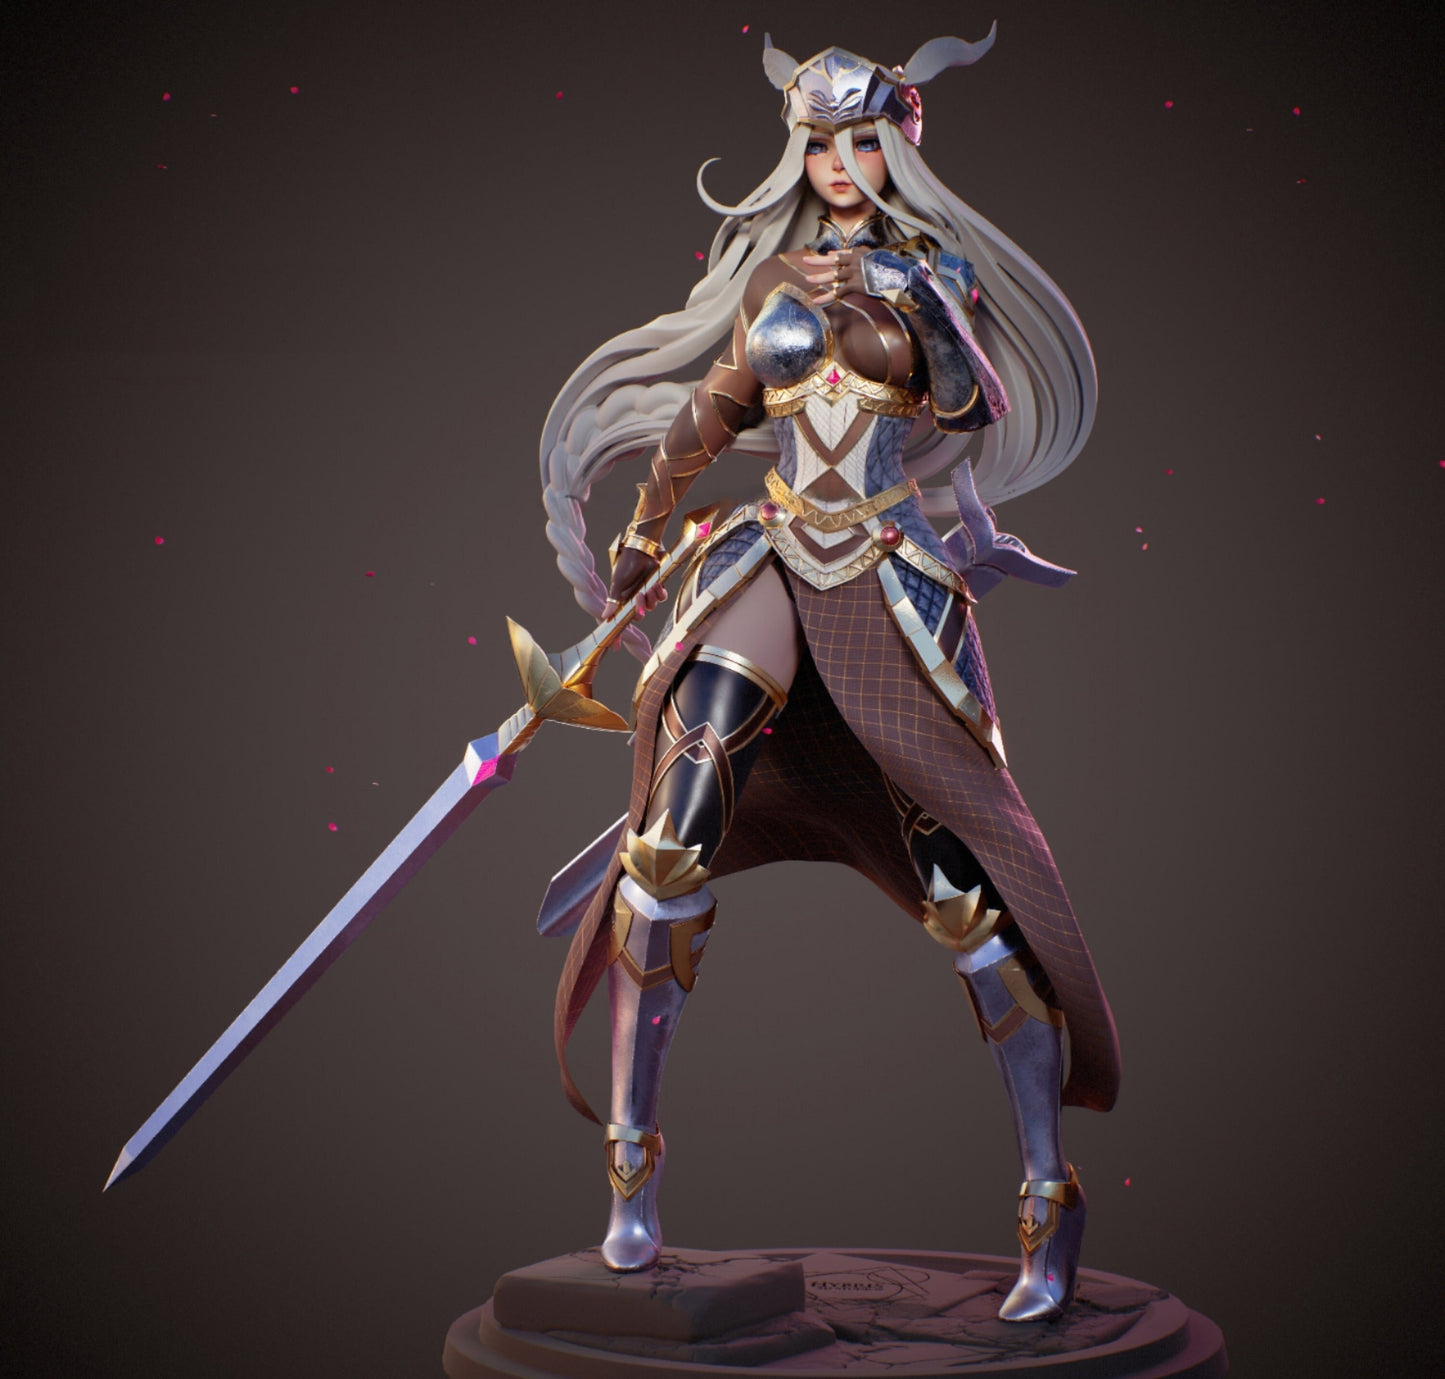 Warrior Girl STL File 3D Printing Digital STL File Anime Character 0063